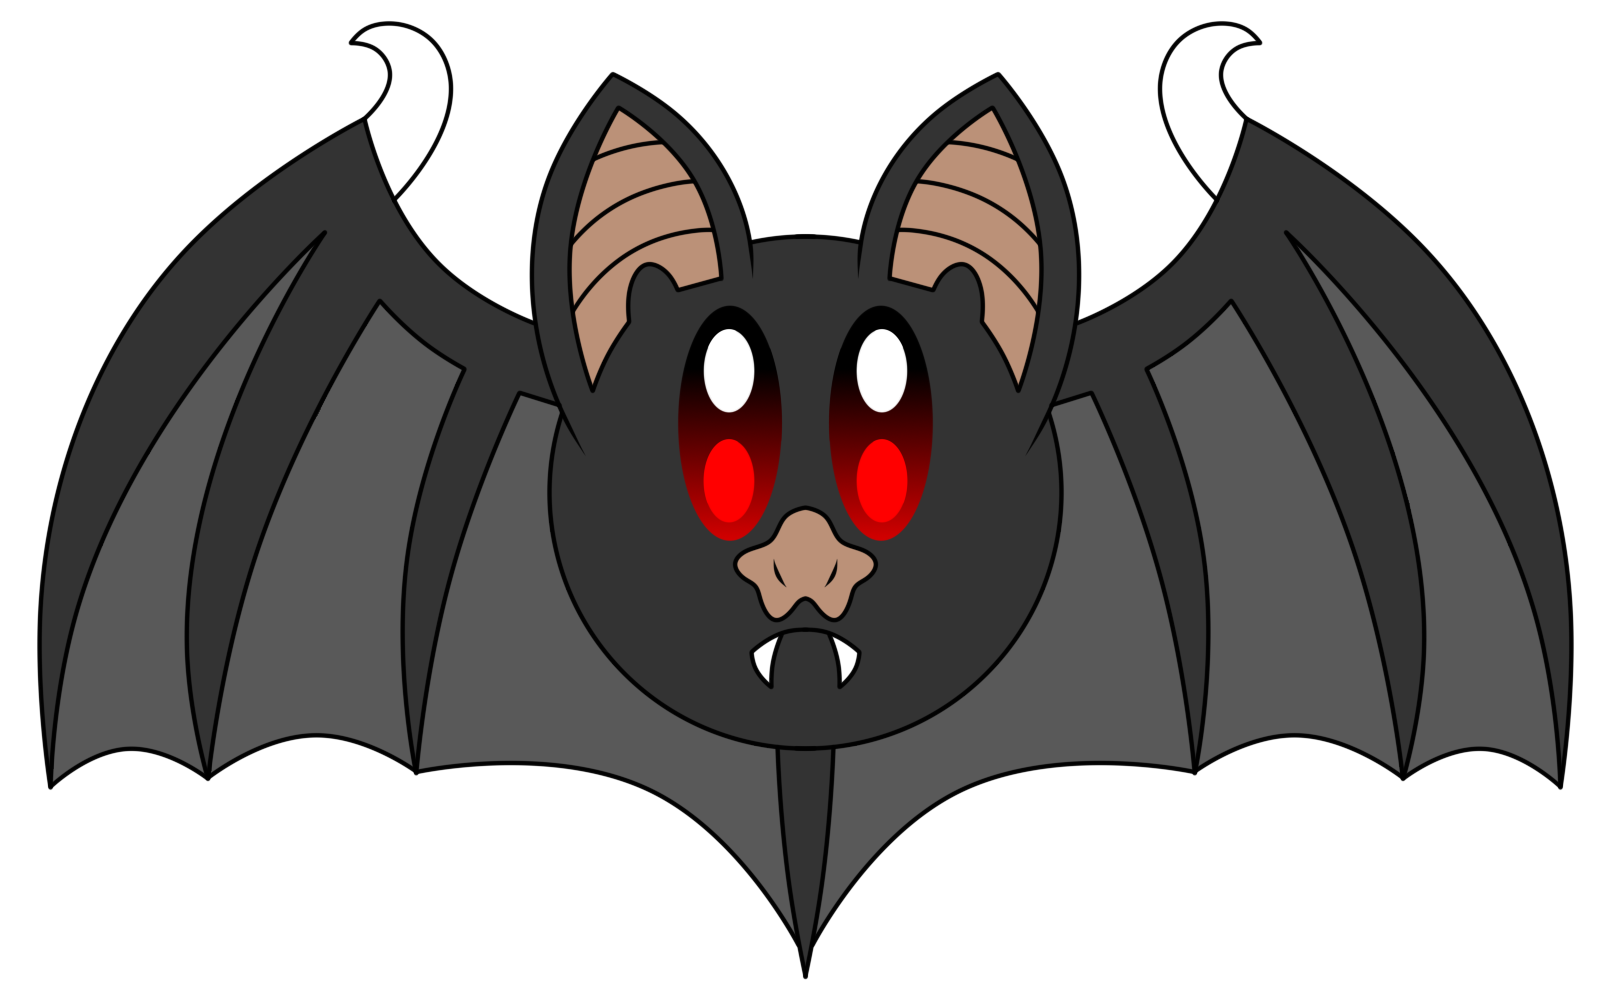 Vampire Bat Clipart Transparent Background, Cartoon Vampire With His Little  Bat, Vampire Clipart, Vampire, Bat PNG Image For Free Download